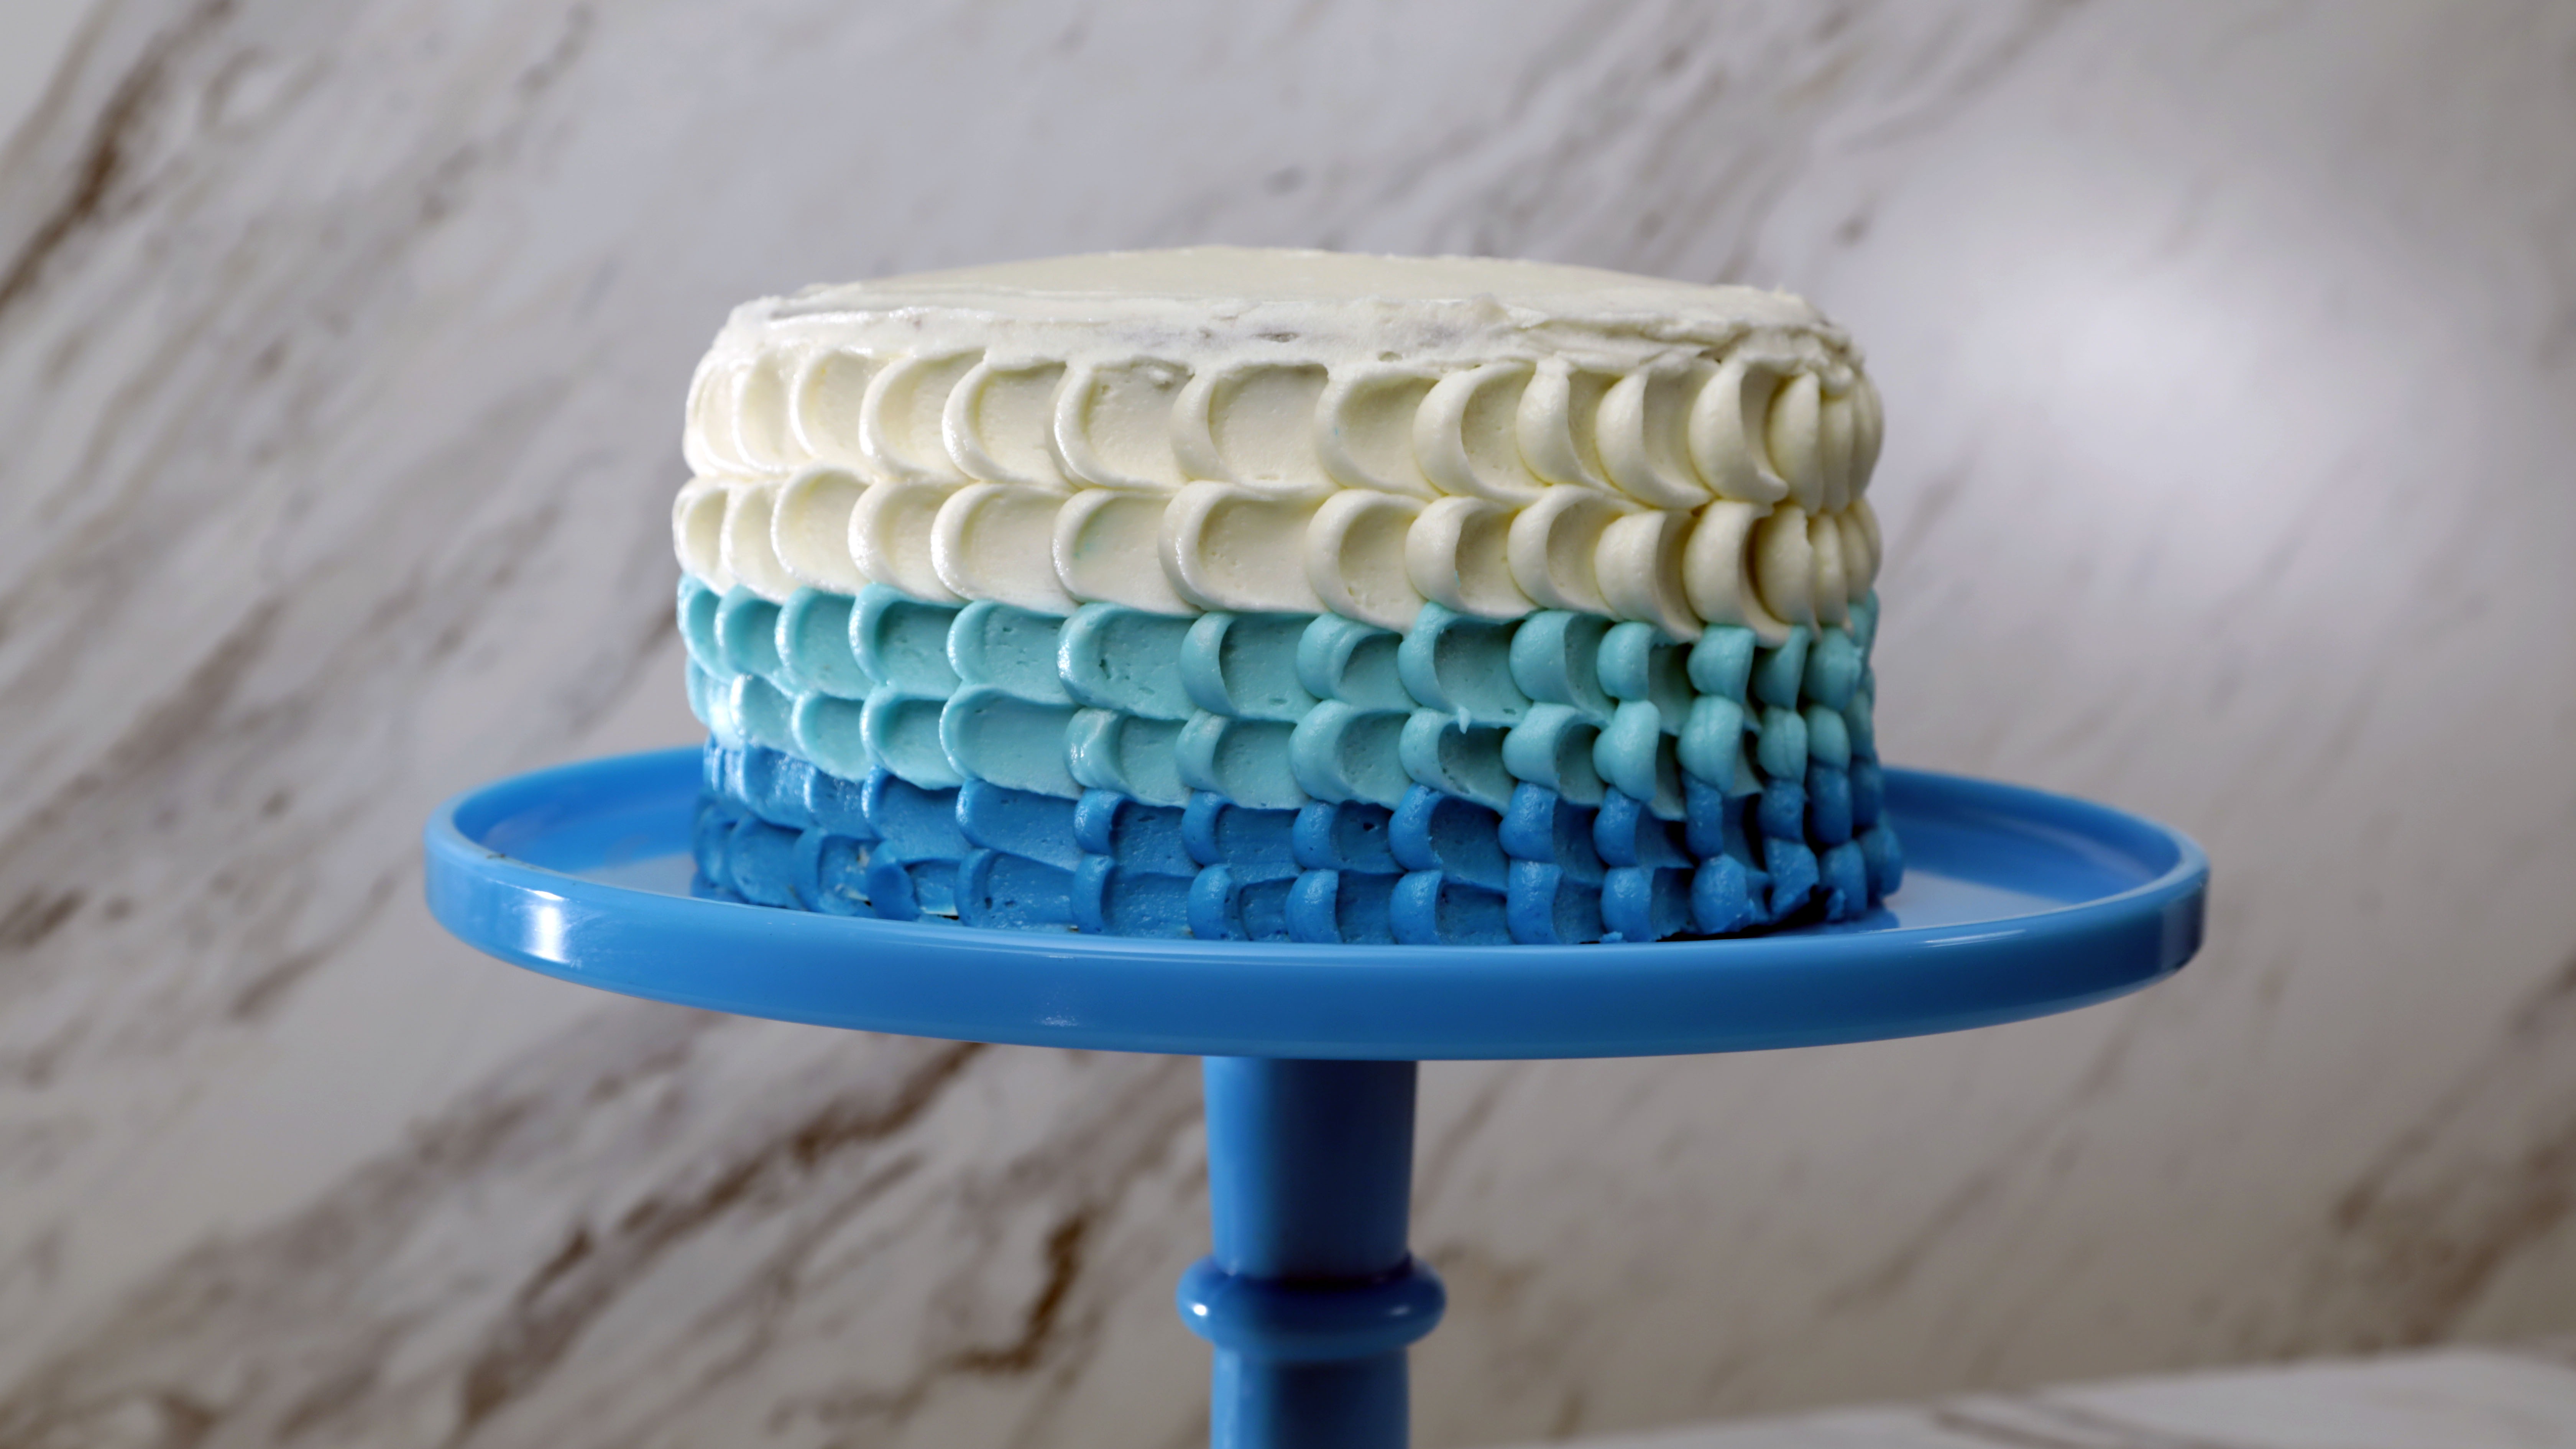 Jacob's Blue Ombre Rosette Cake